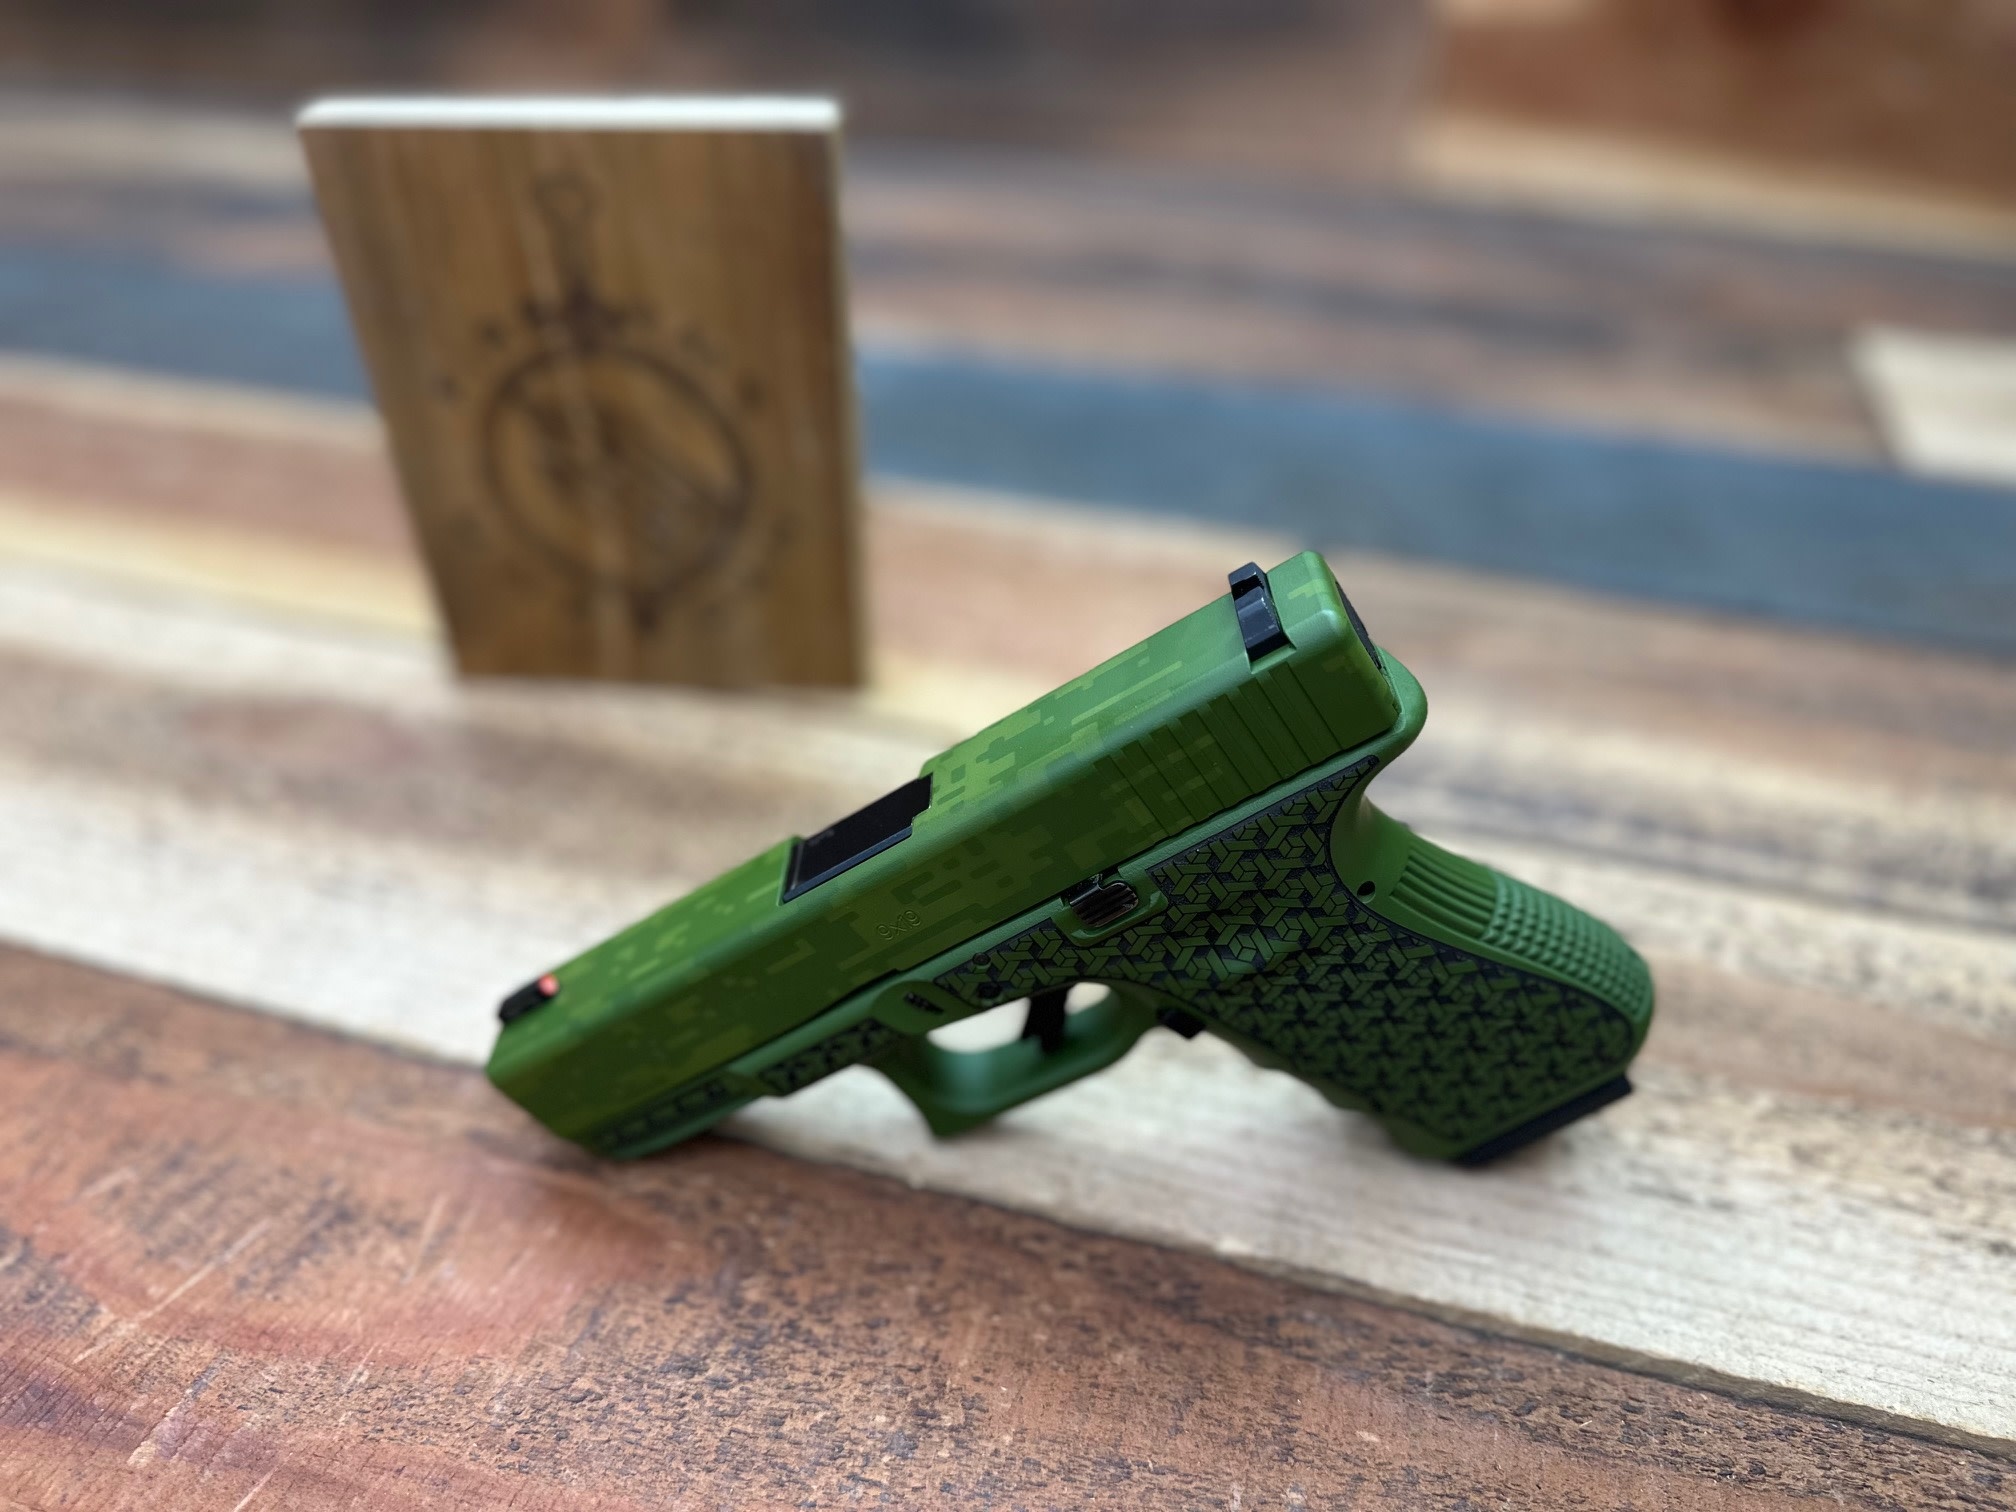 Glock 19 Gen3, Refurbished, Custom Cerakote Multicam Bright Green, Laser Stipled G19 Pistol